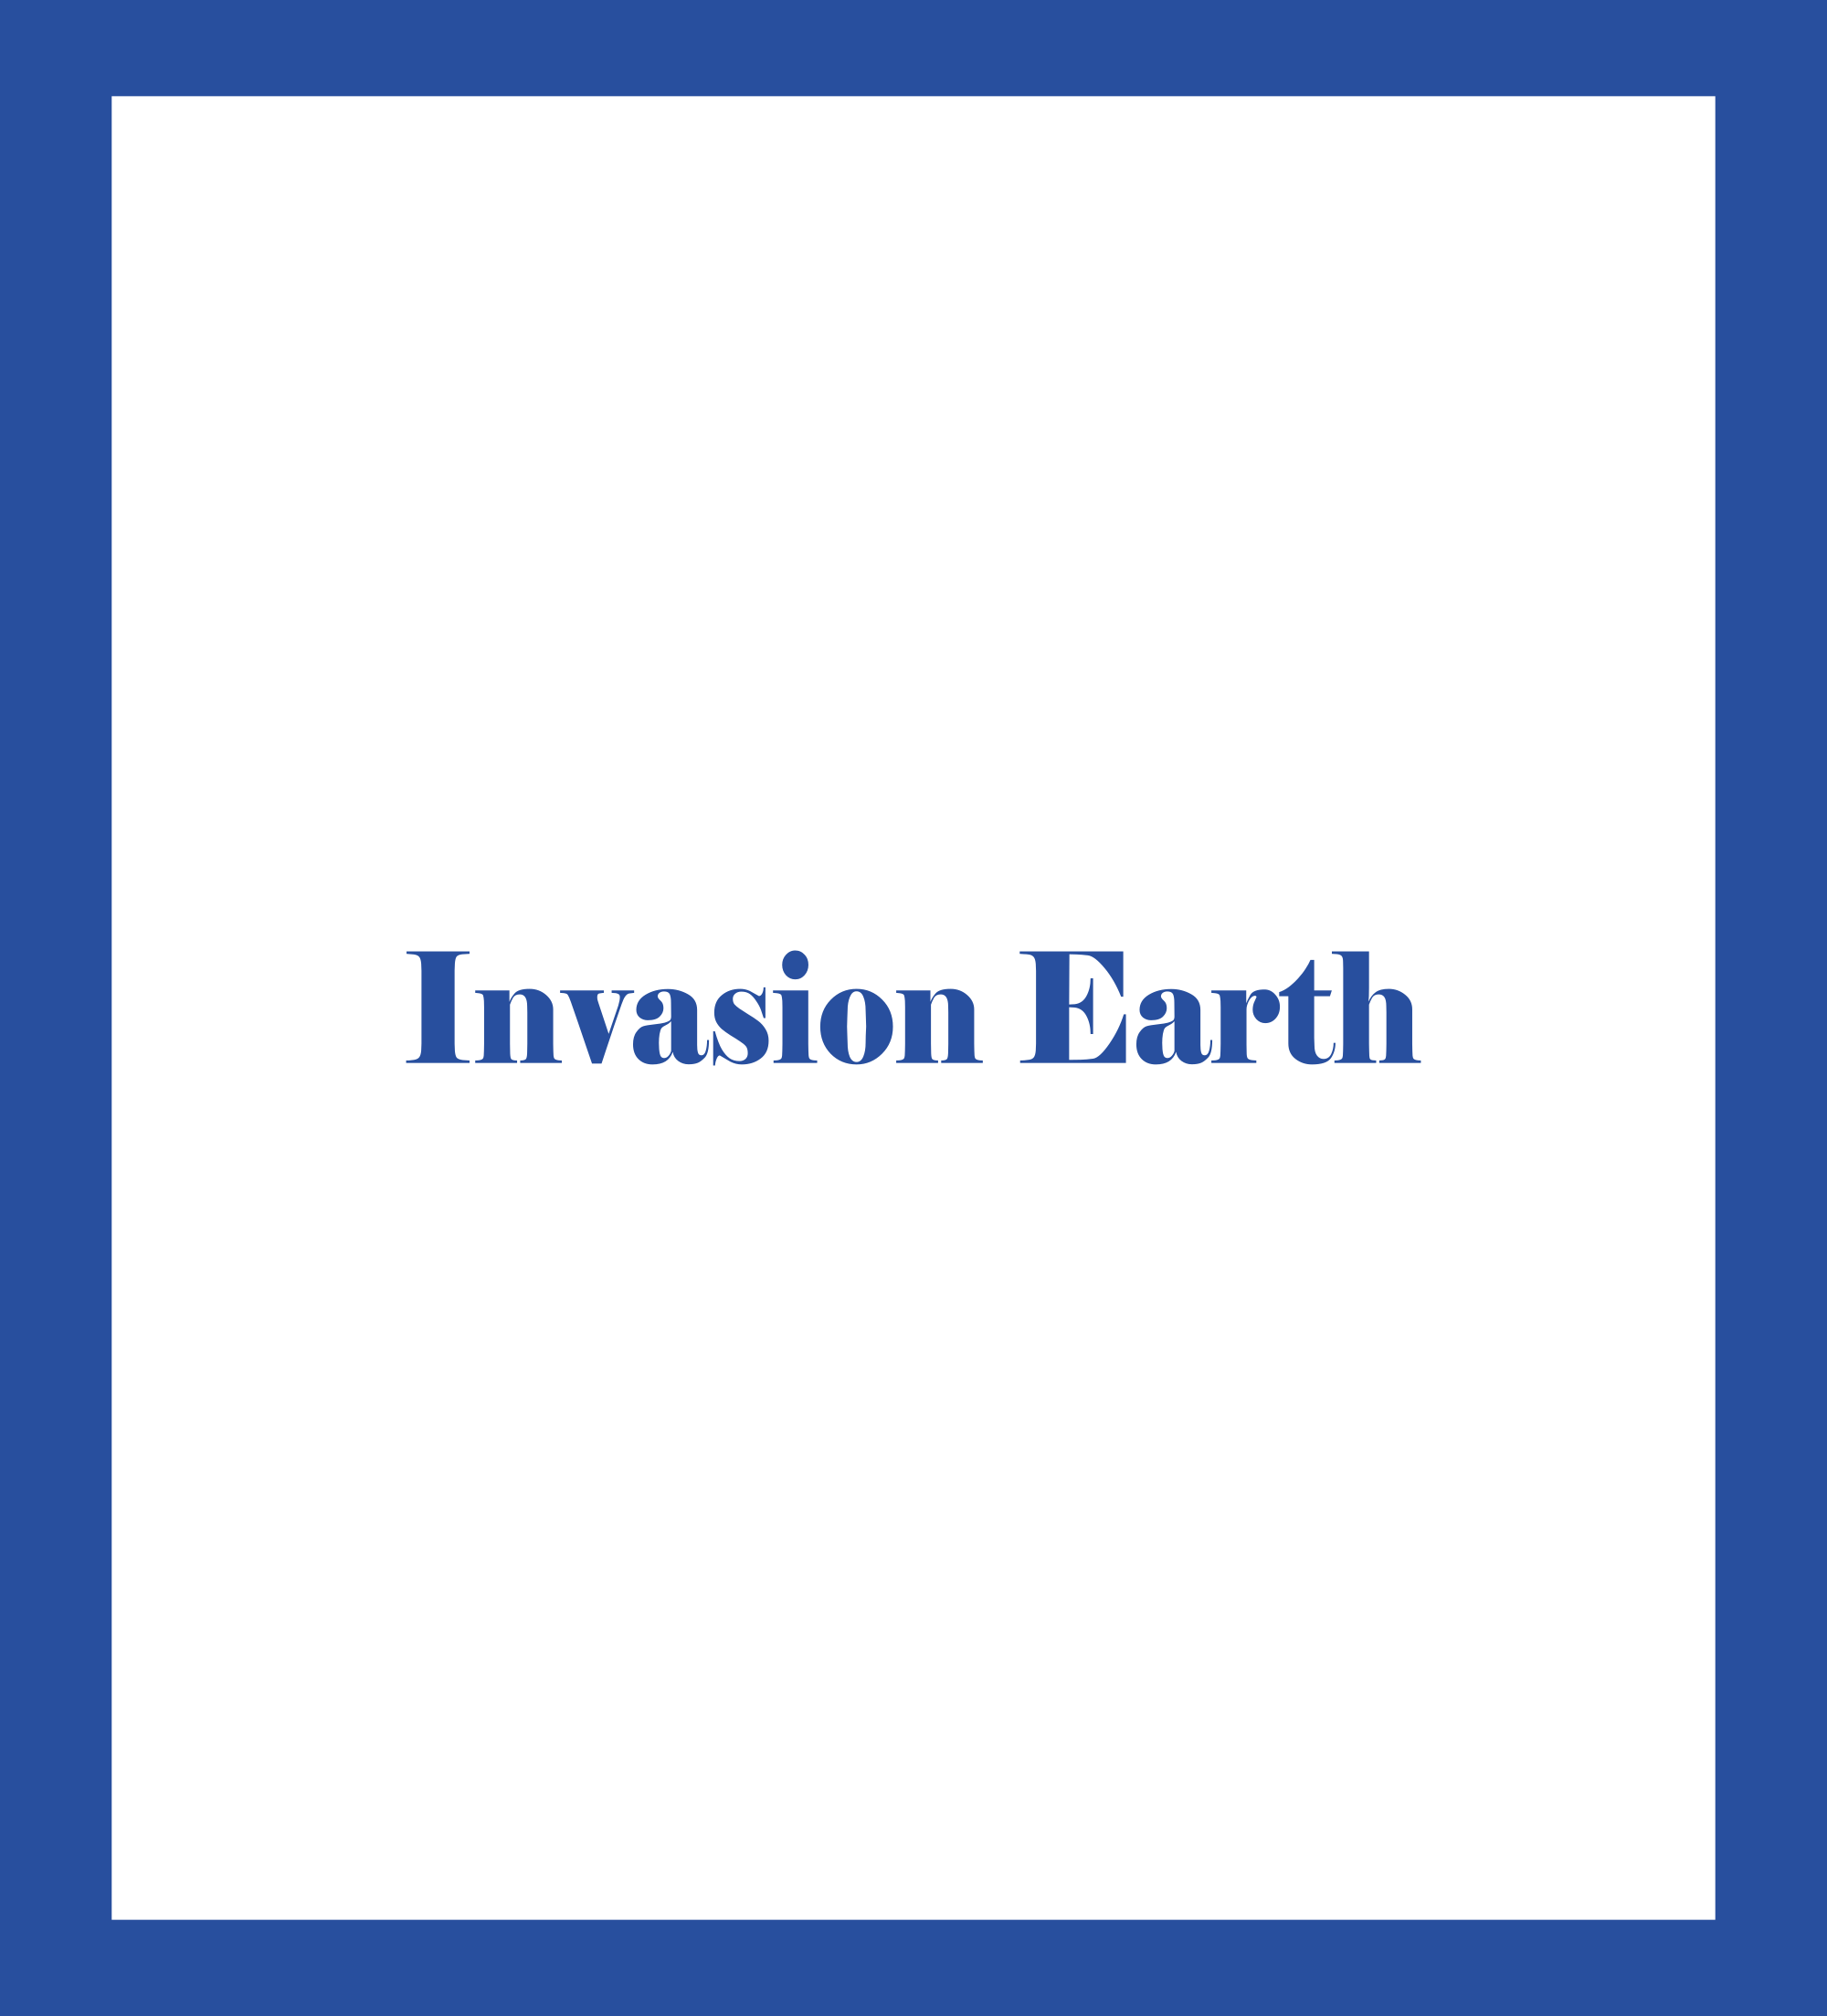 Invasión extraterrestre